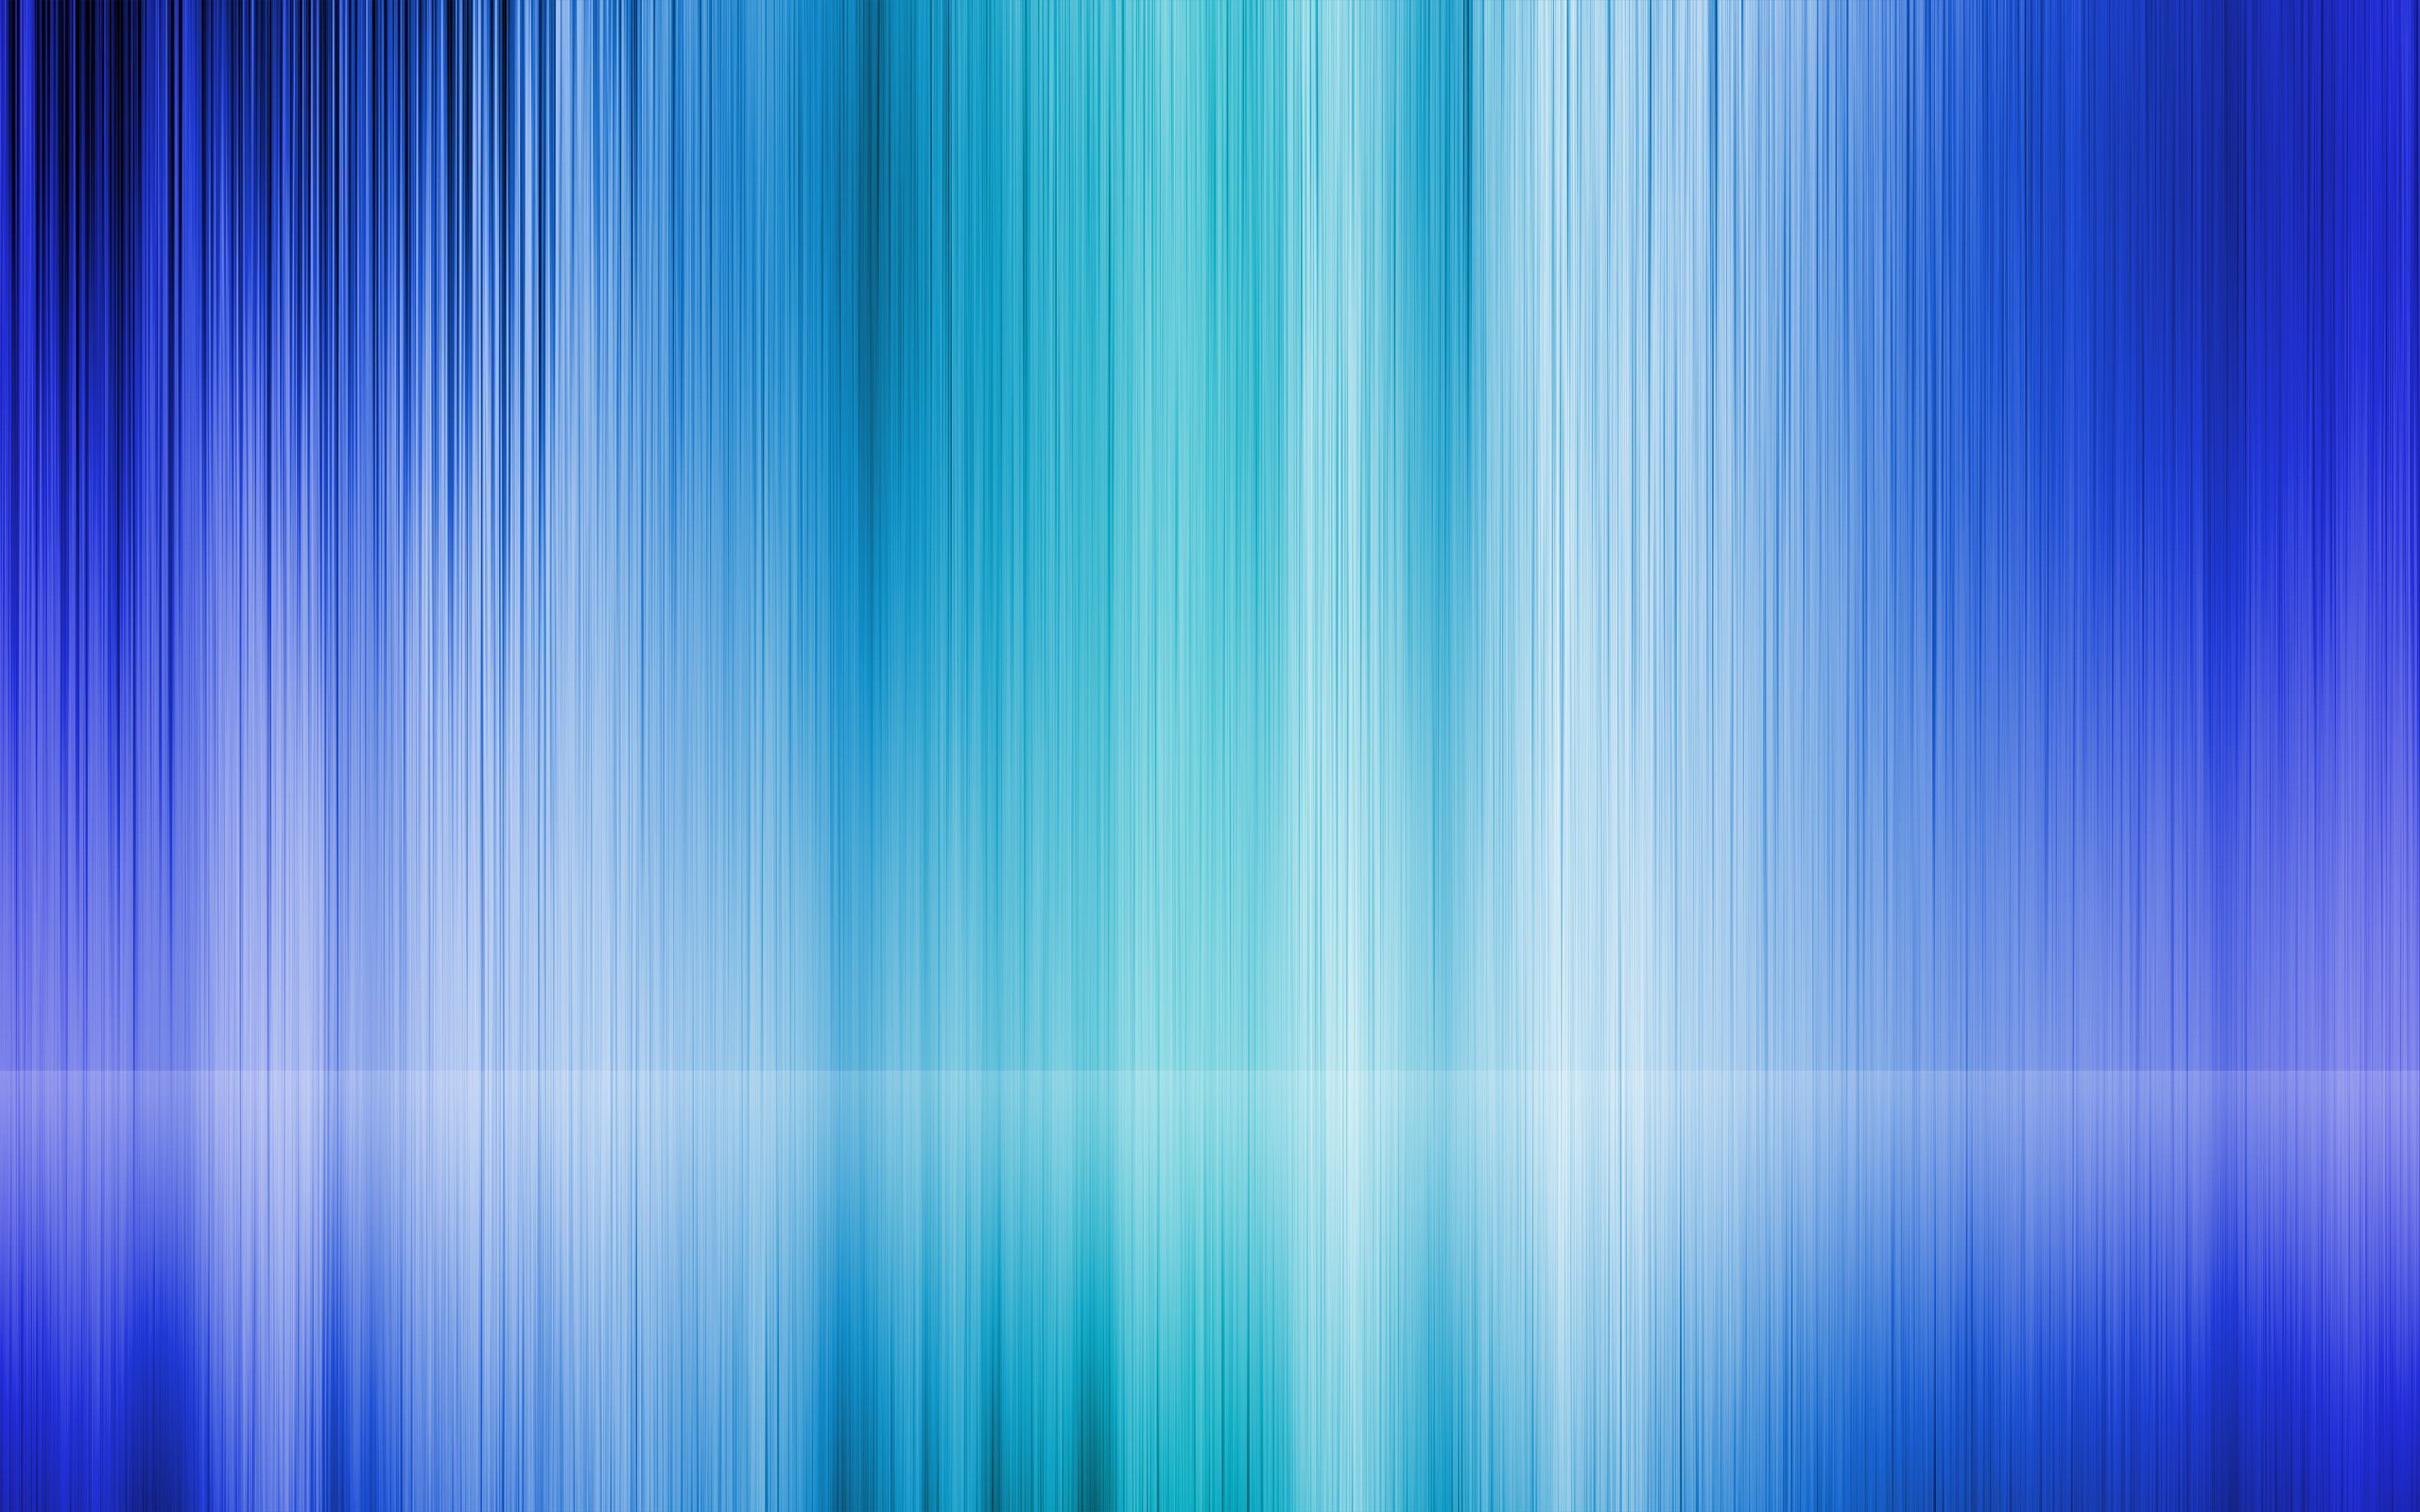 Top Light Blue Wallpaper 2560x1600 Images for Pinterest